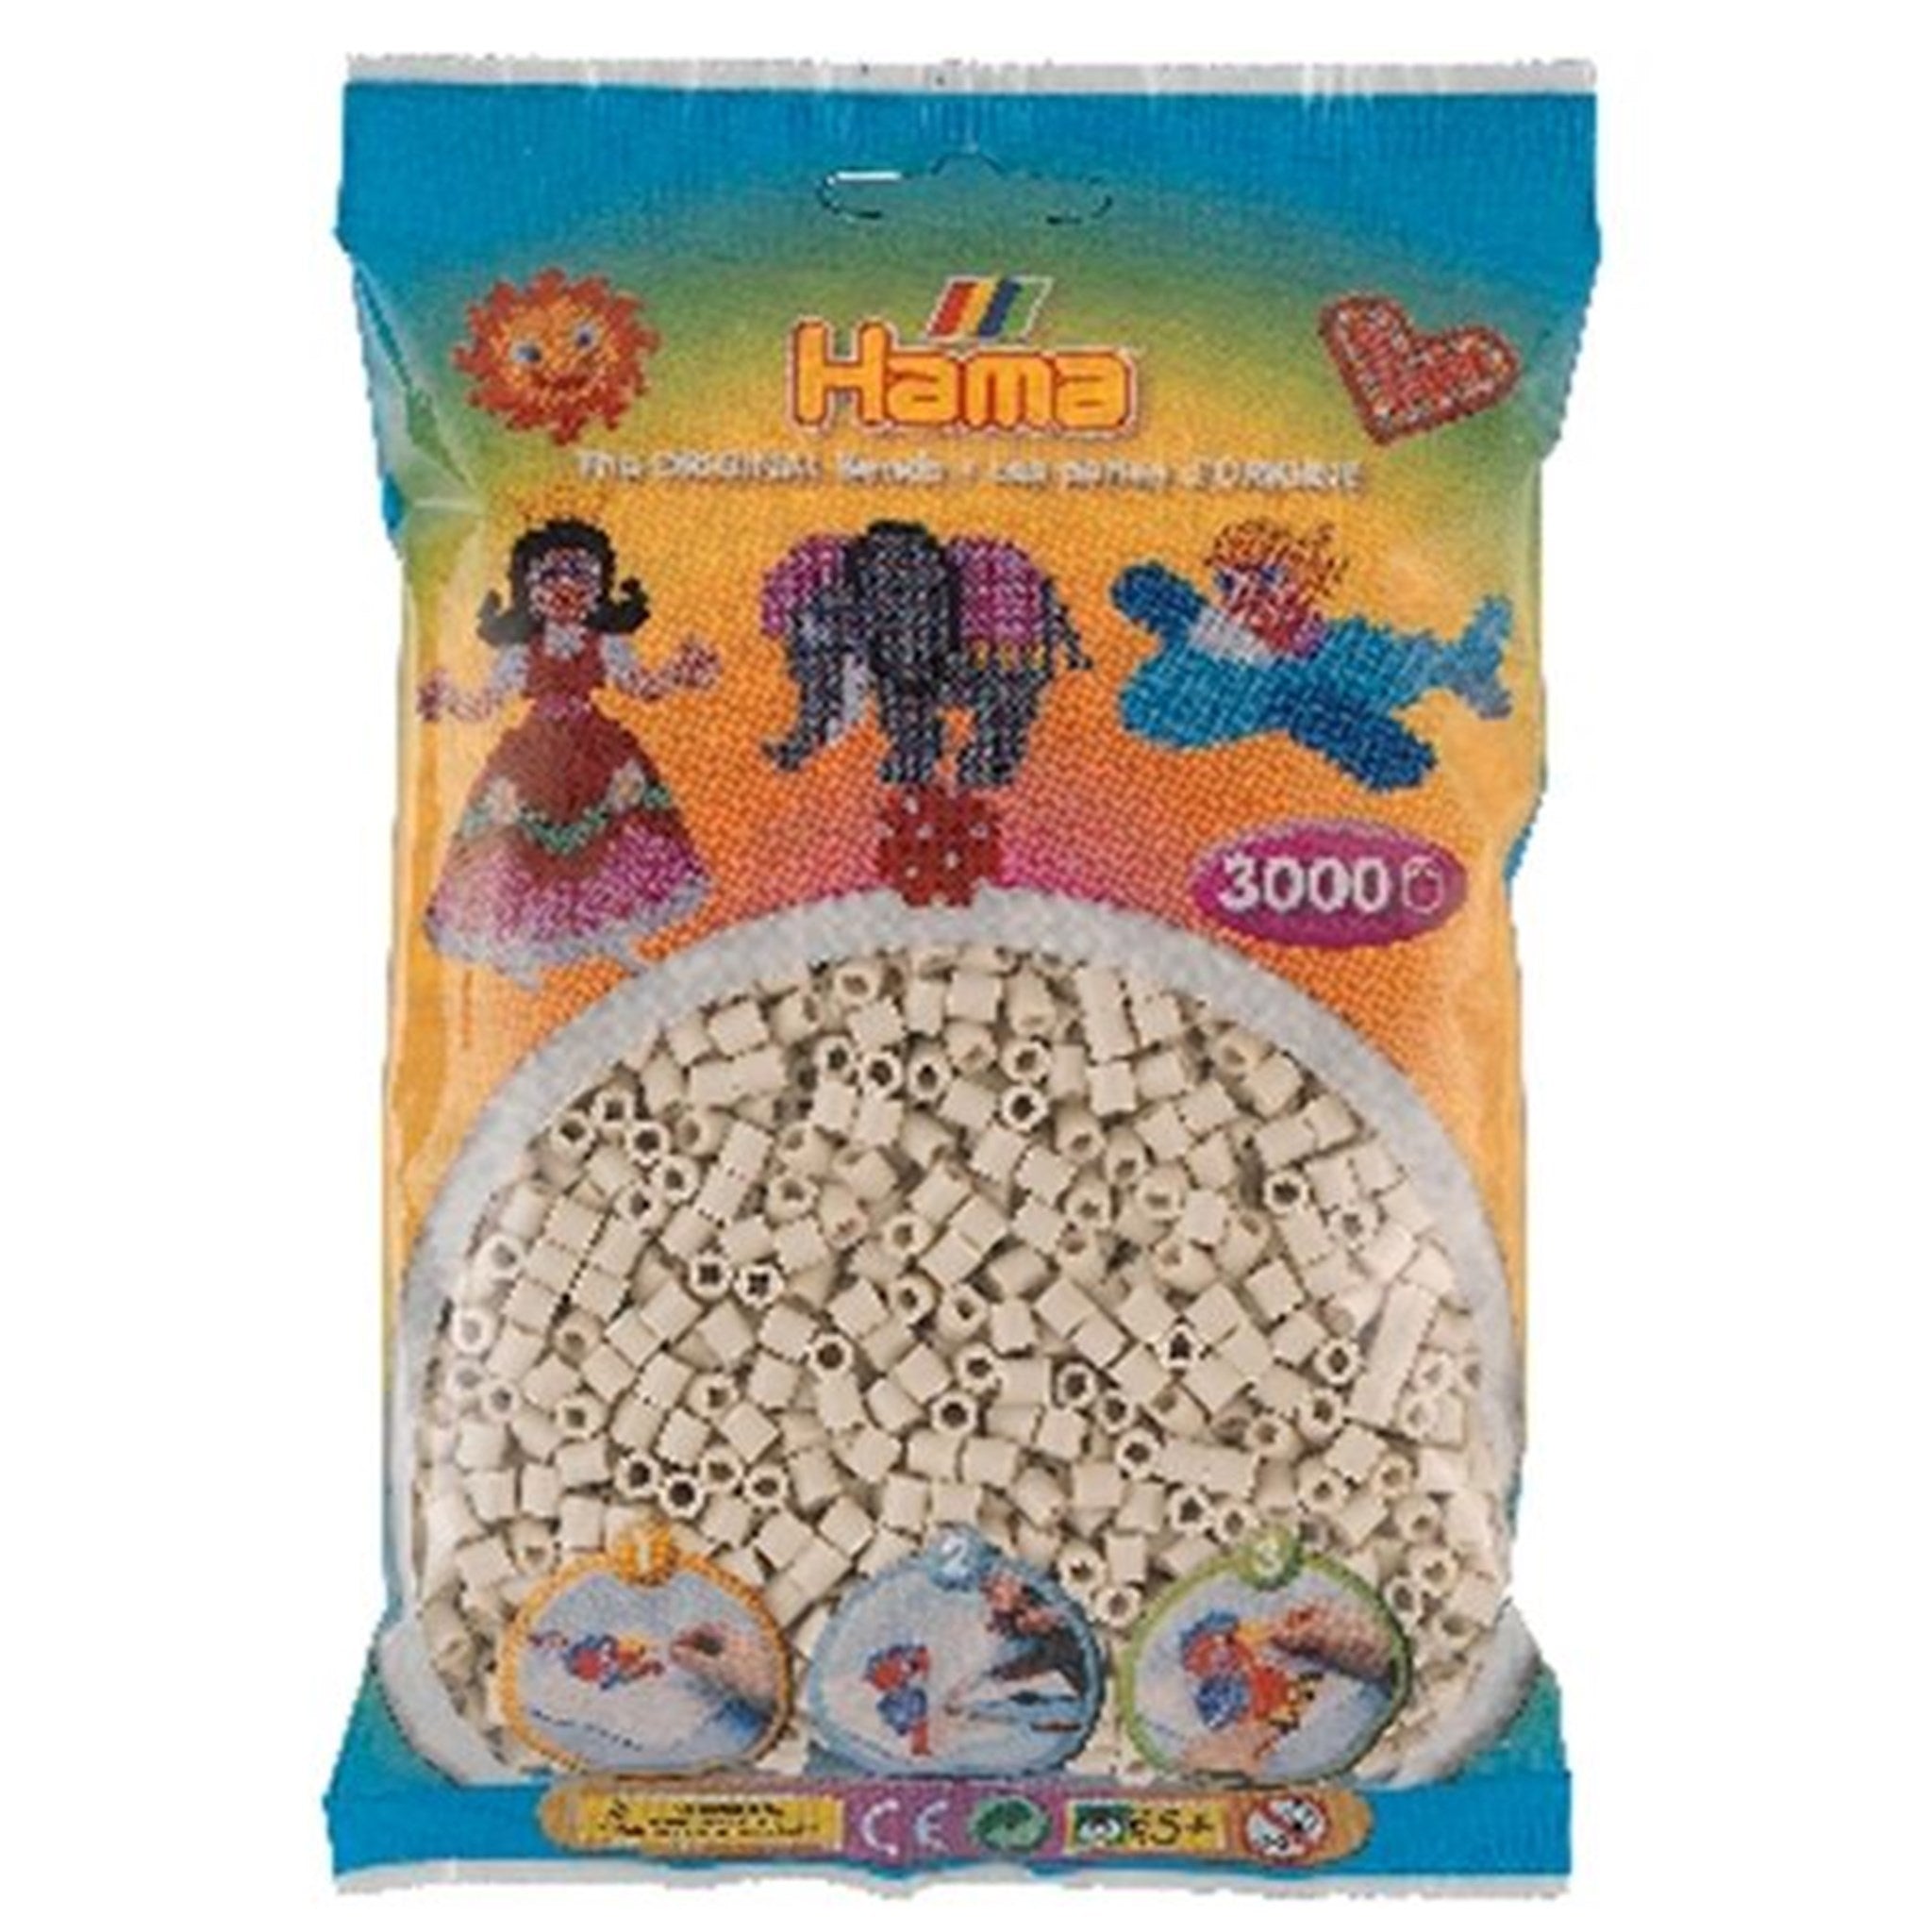 HAMA Midi Beads 3000 pcs Kit